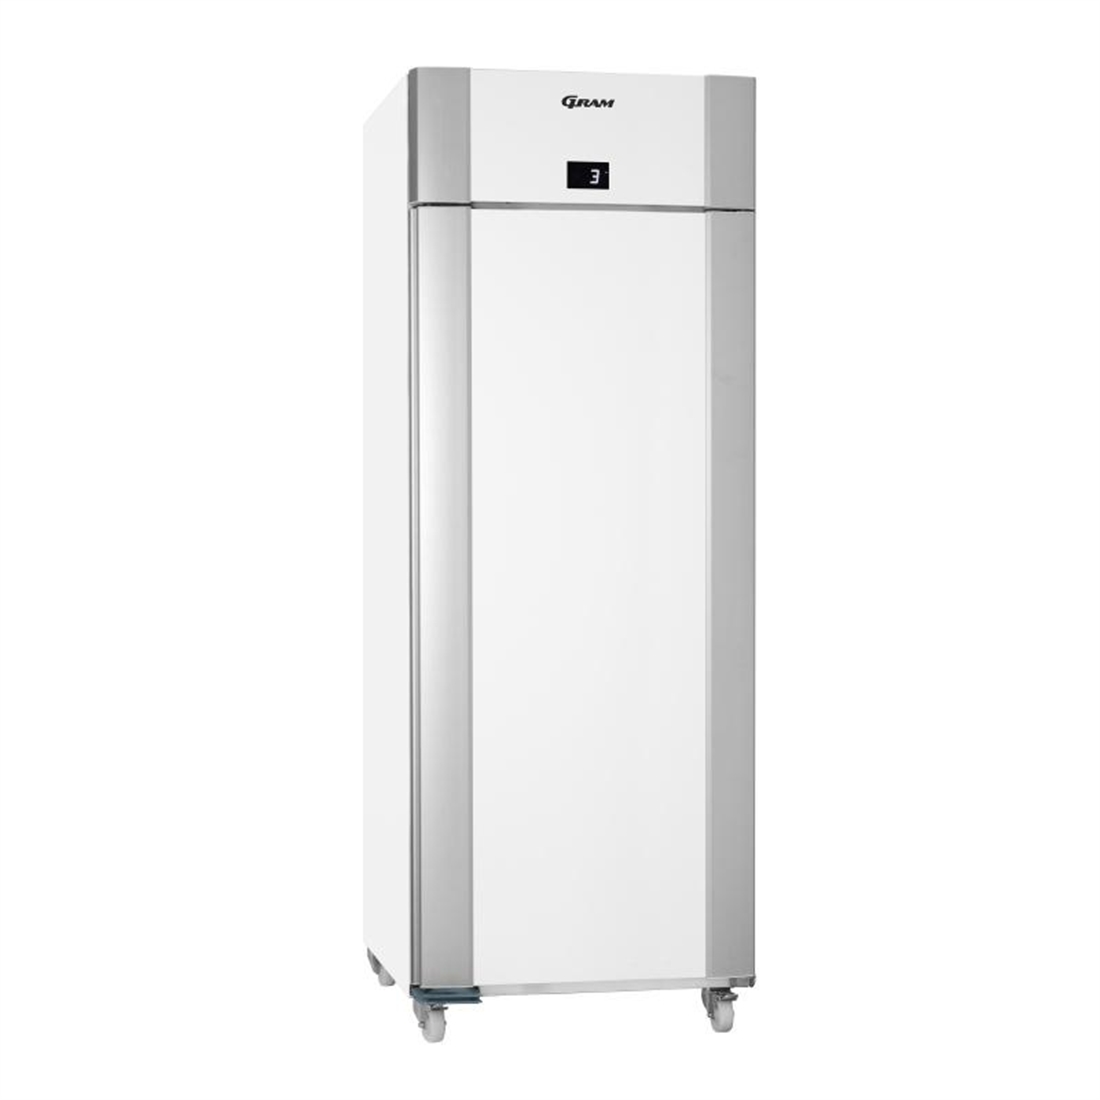 Gram Eco Twin 1 Door 601Ltr Freezer White F 82 LAG C1 4N